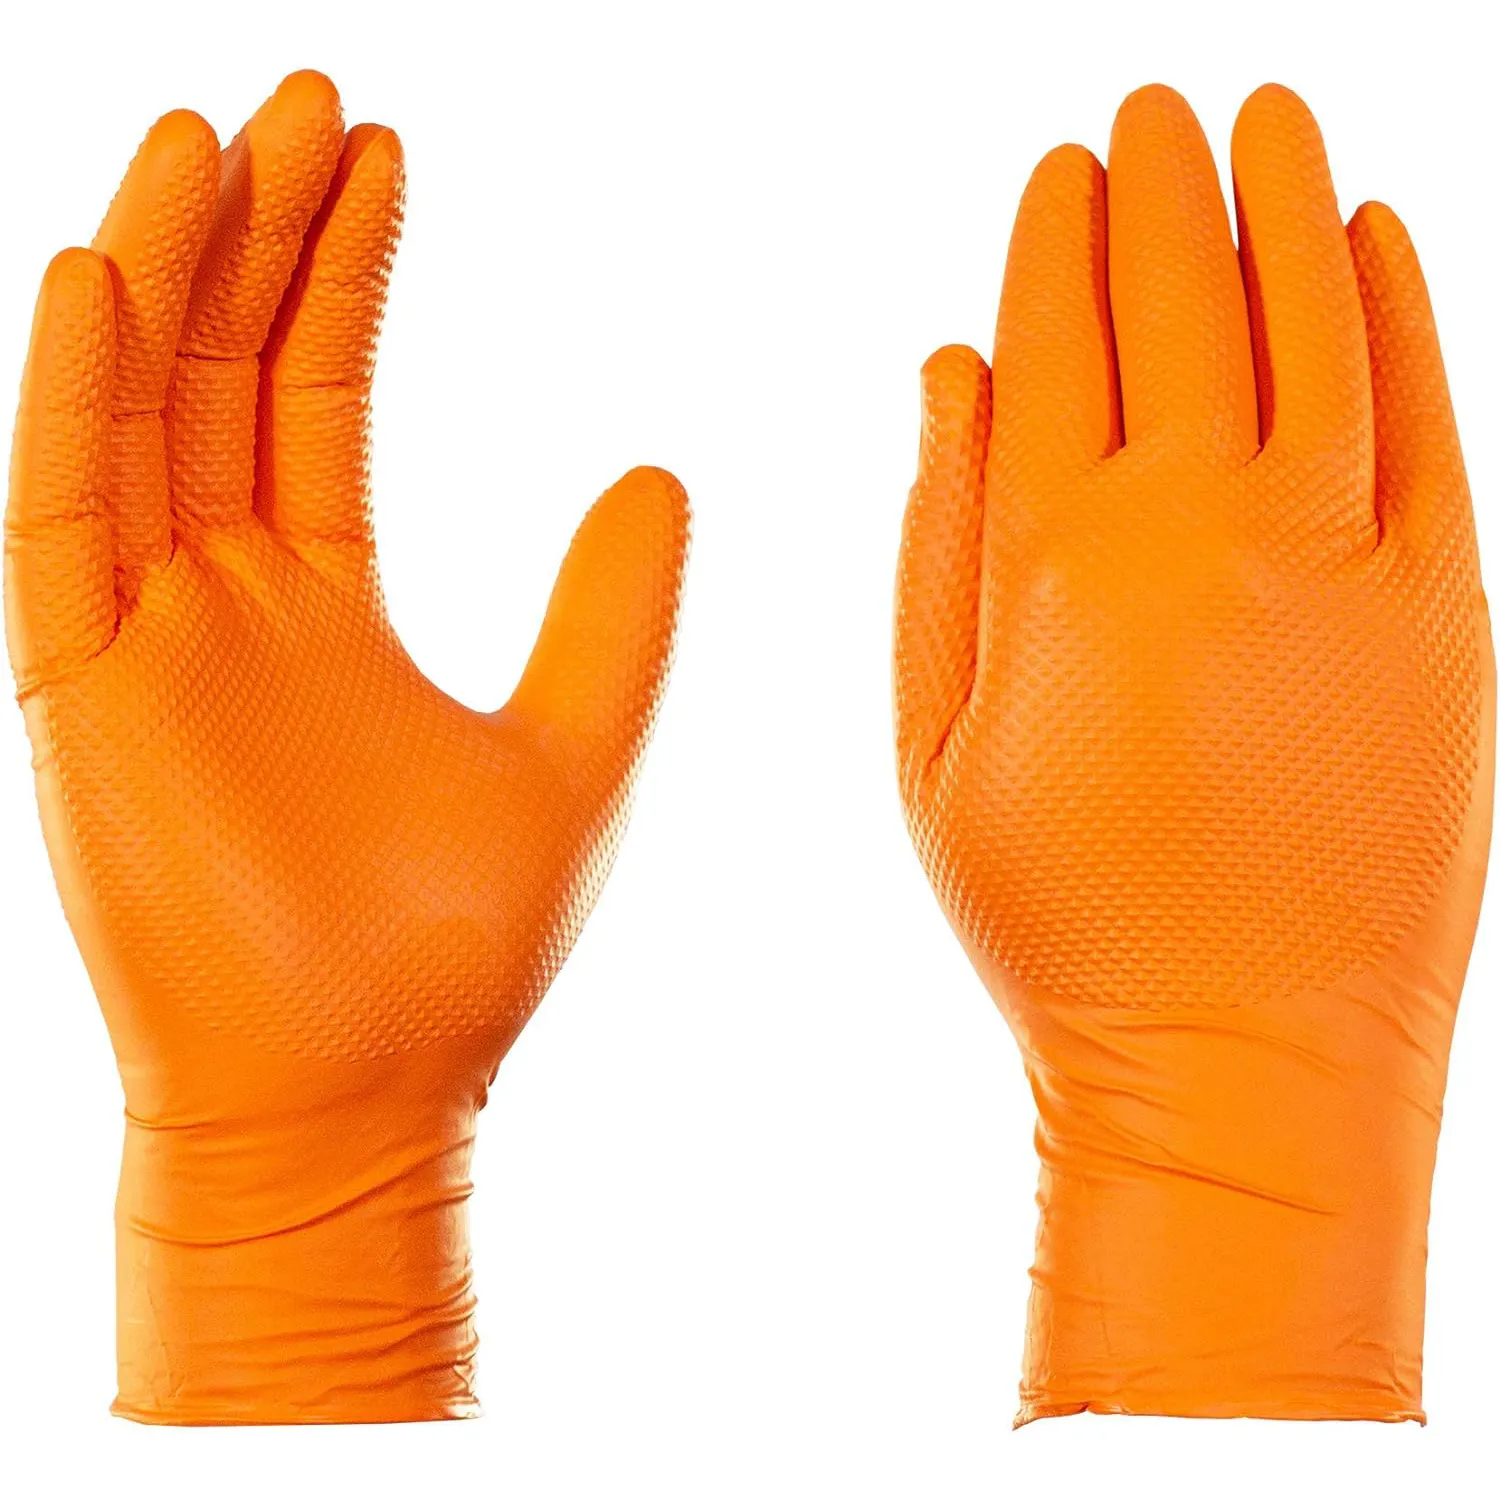 medical disposable 8 mil nitrile light orange diamond nitrile gloves disposable latex free box of 100 powder free